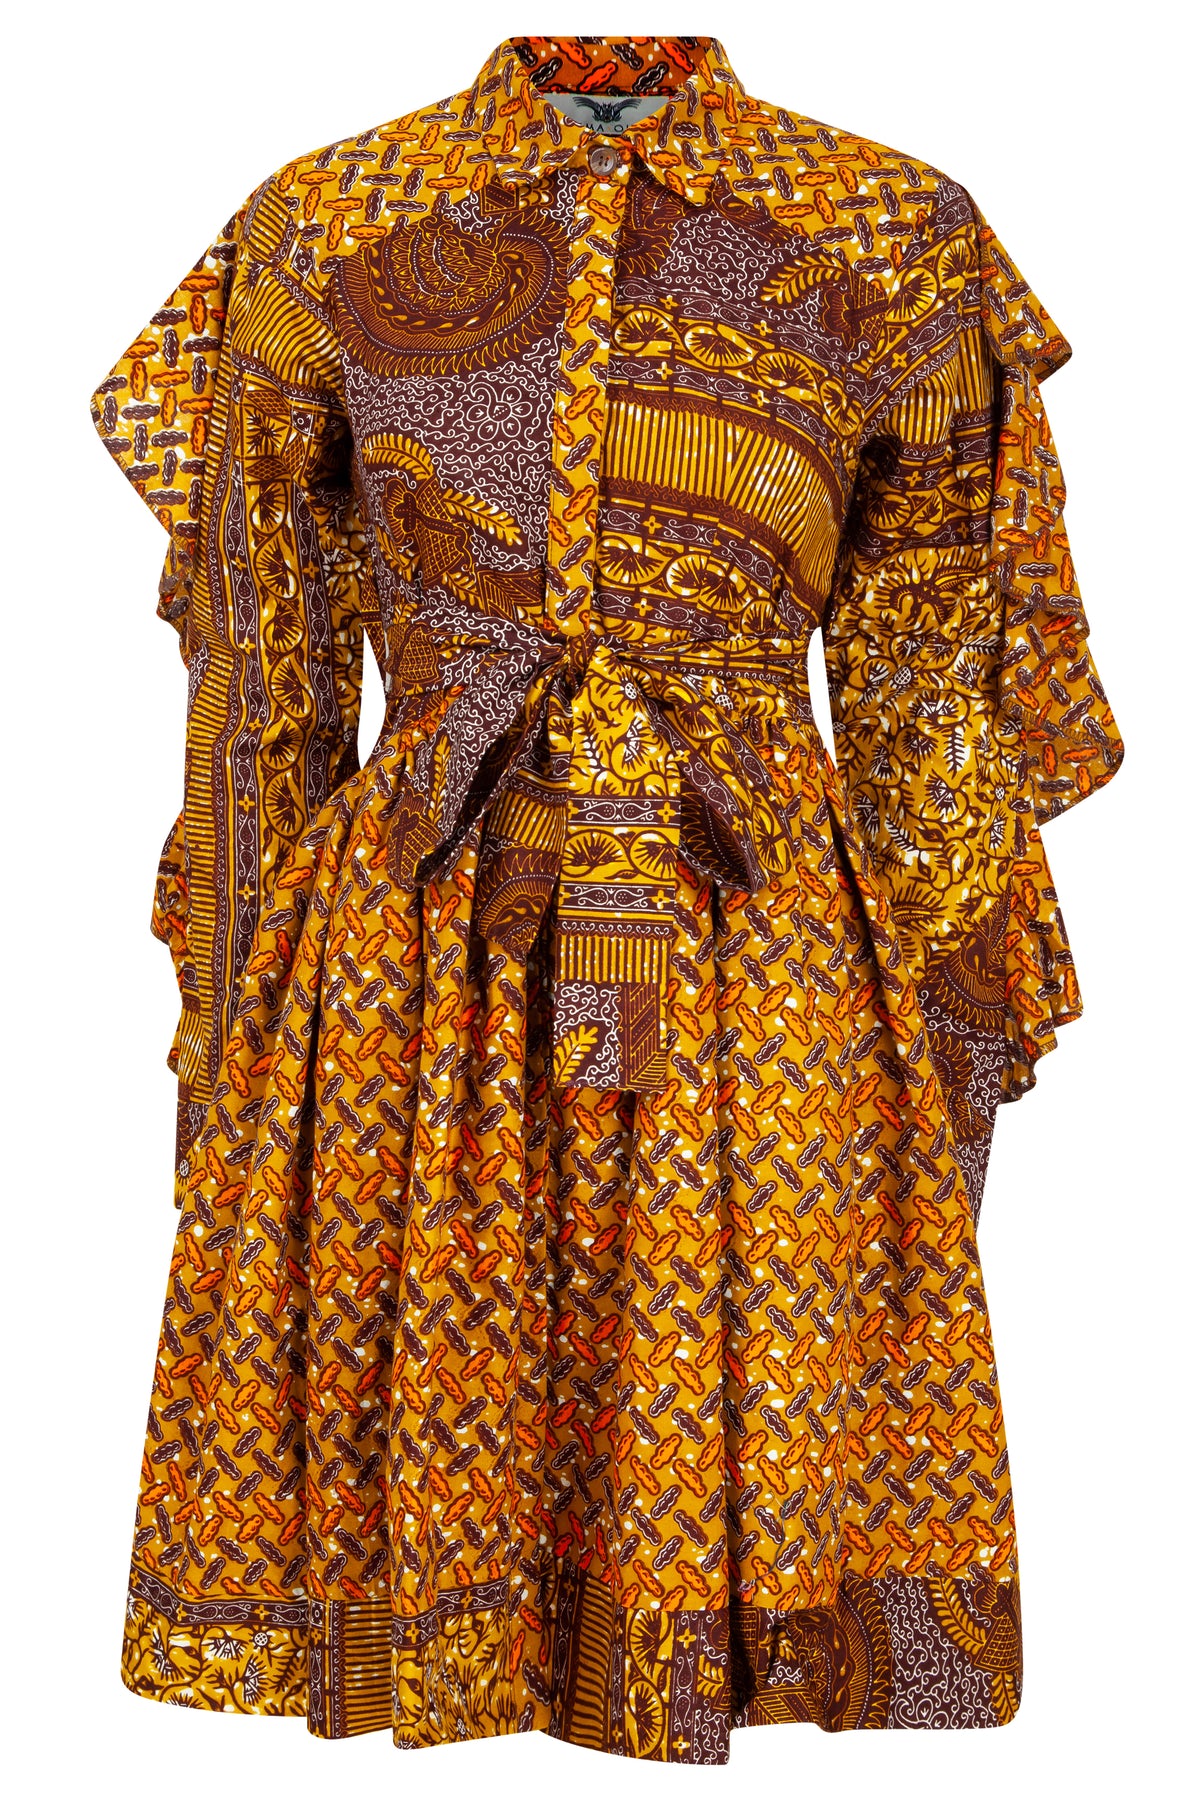 African print dress Ohema Ohene